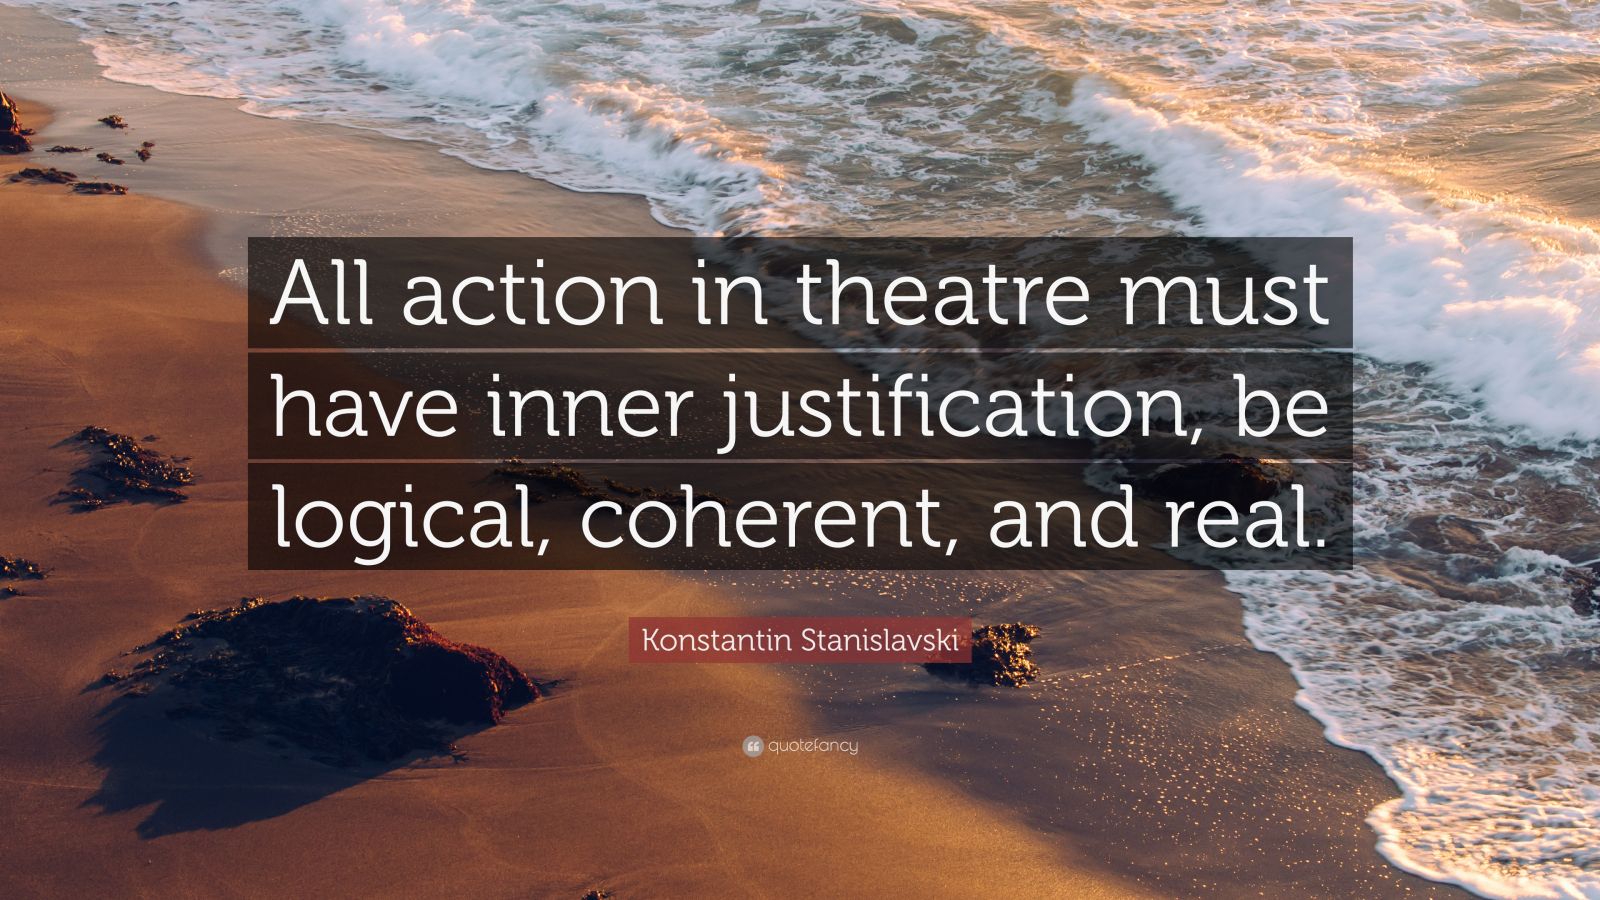 Konstantin Stanislavski Quote: “All action in theatre must have inner ...